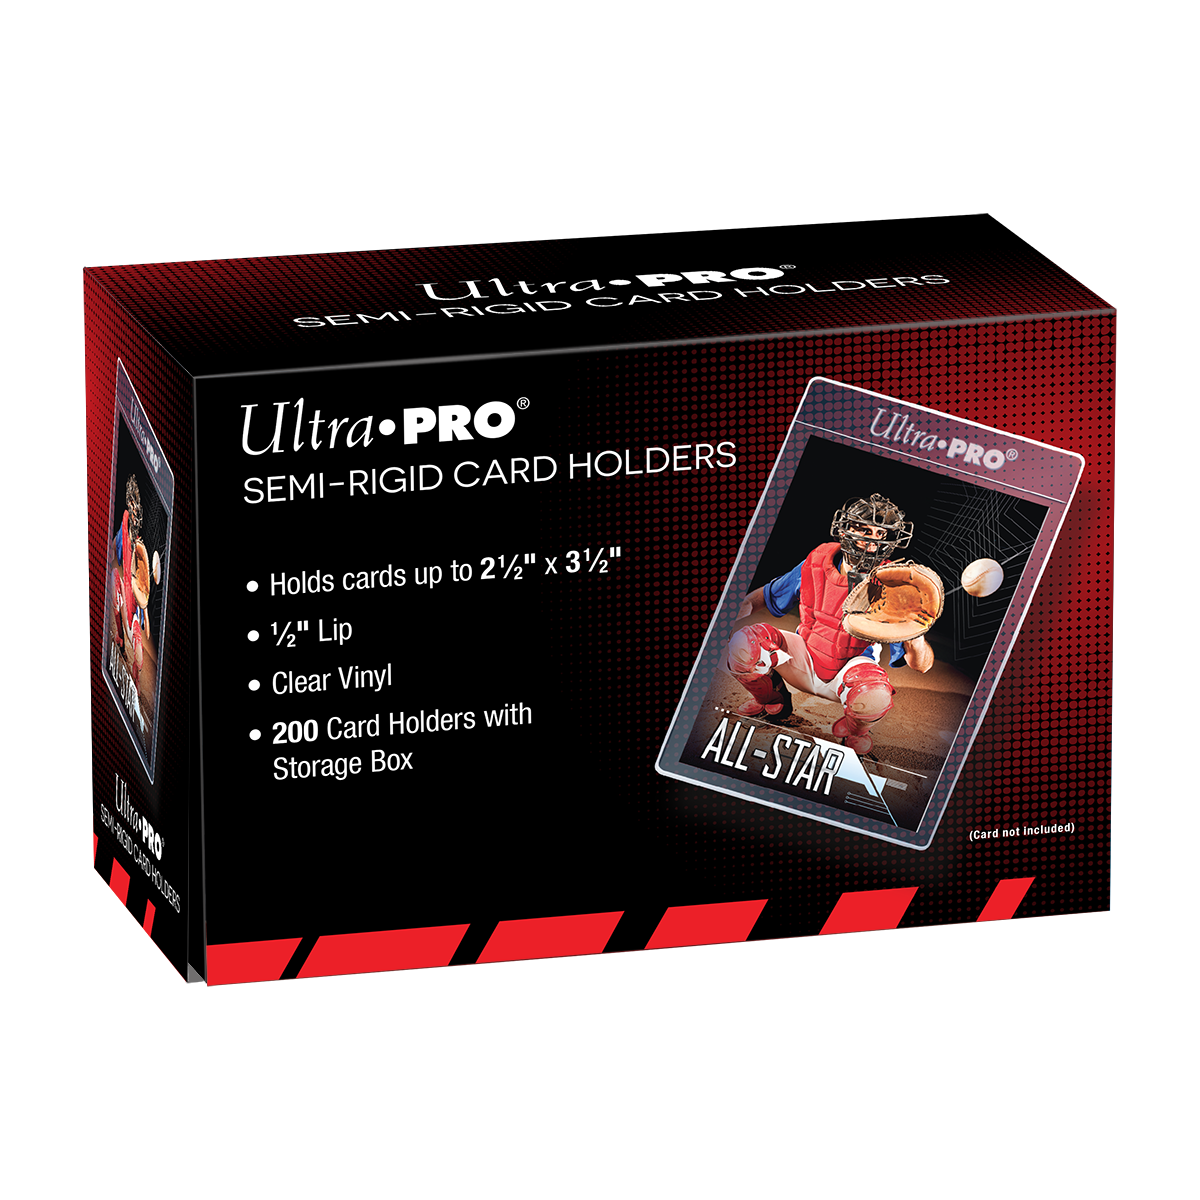 1/2" Lip Semi-Rigid Card Holders (200ct) for Standard Size Cards | Ultra PRO International